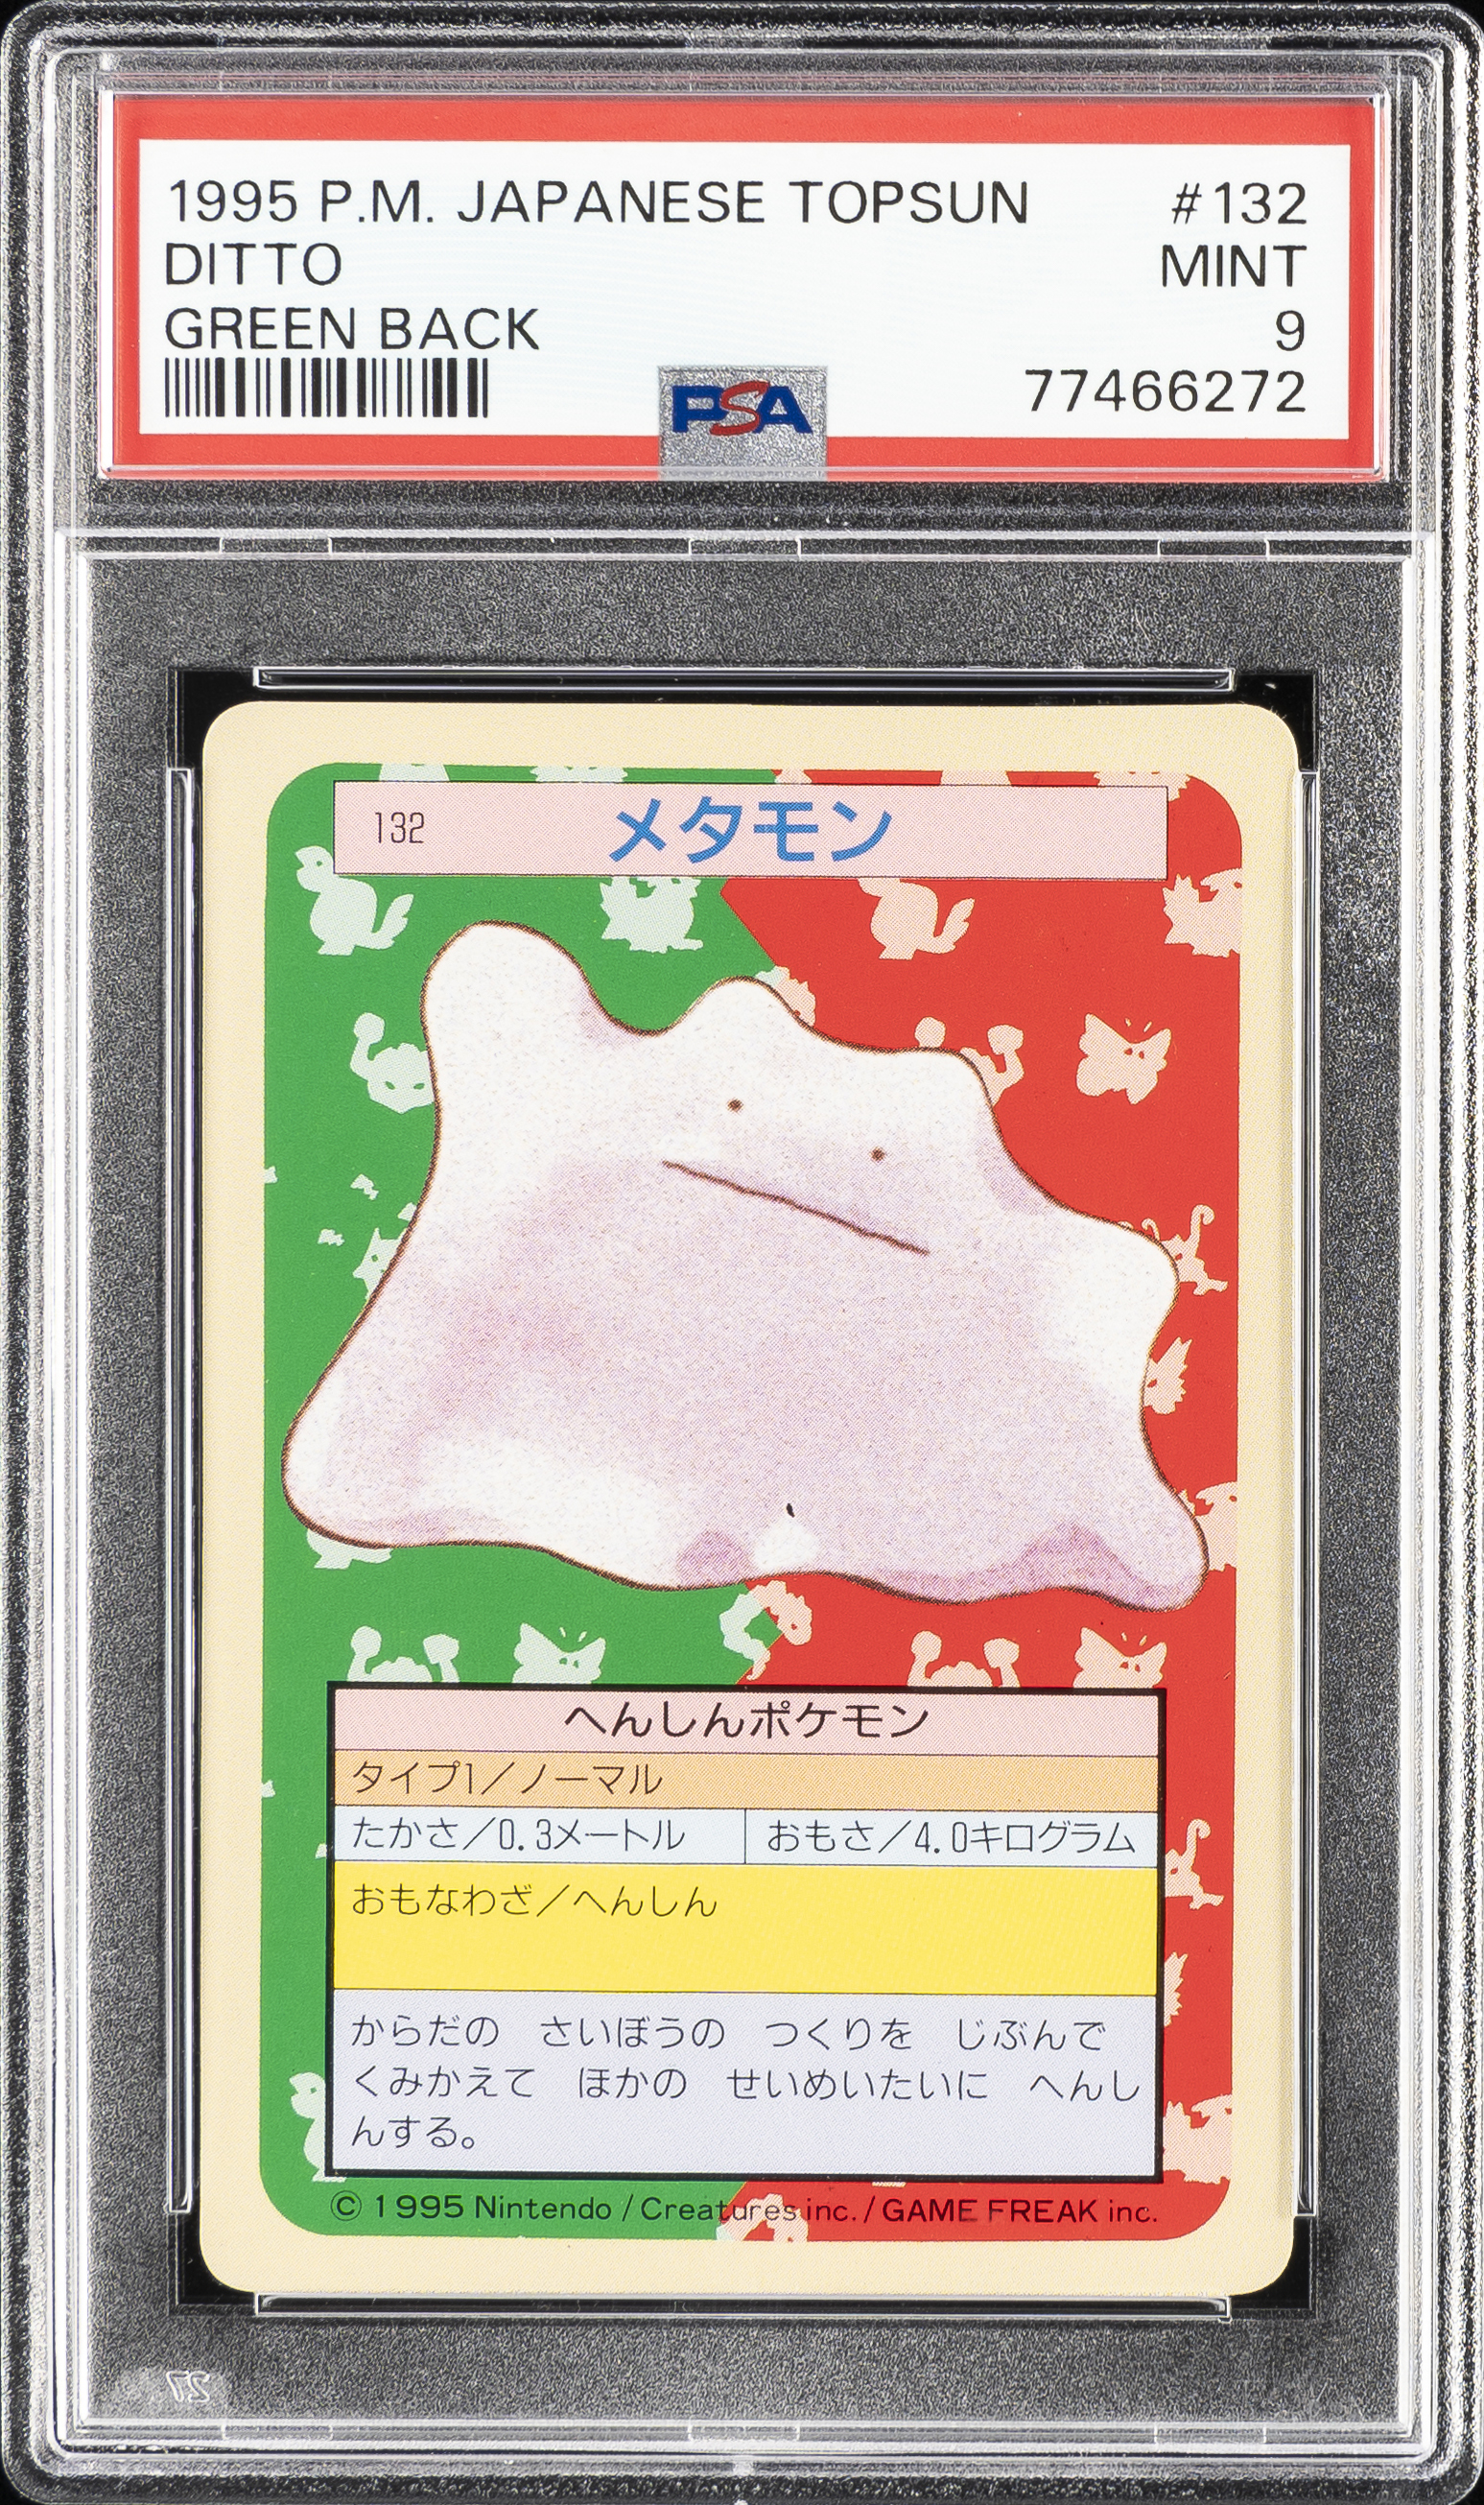 1997 Pokemon Japanese Topsun Green Back 132 Ditto – PSA MINT 9